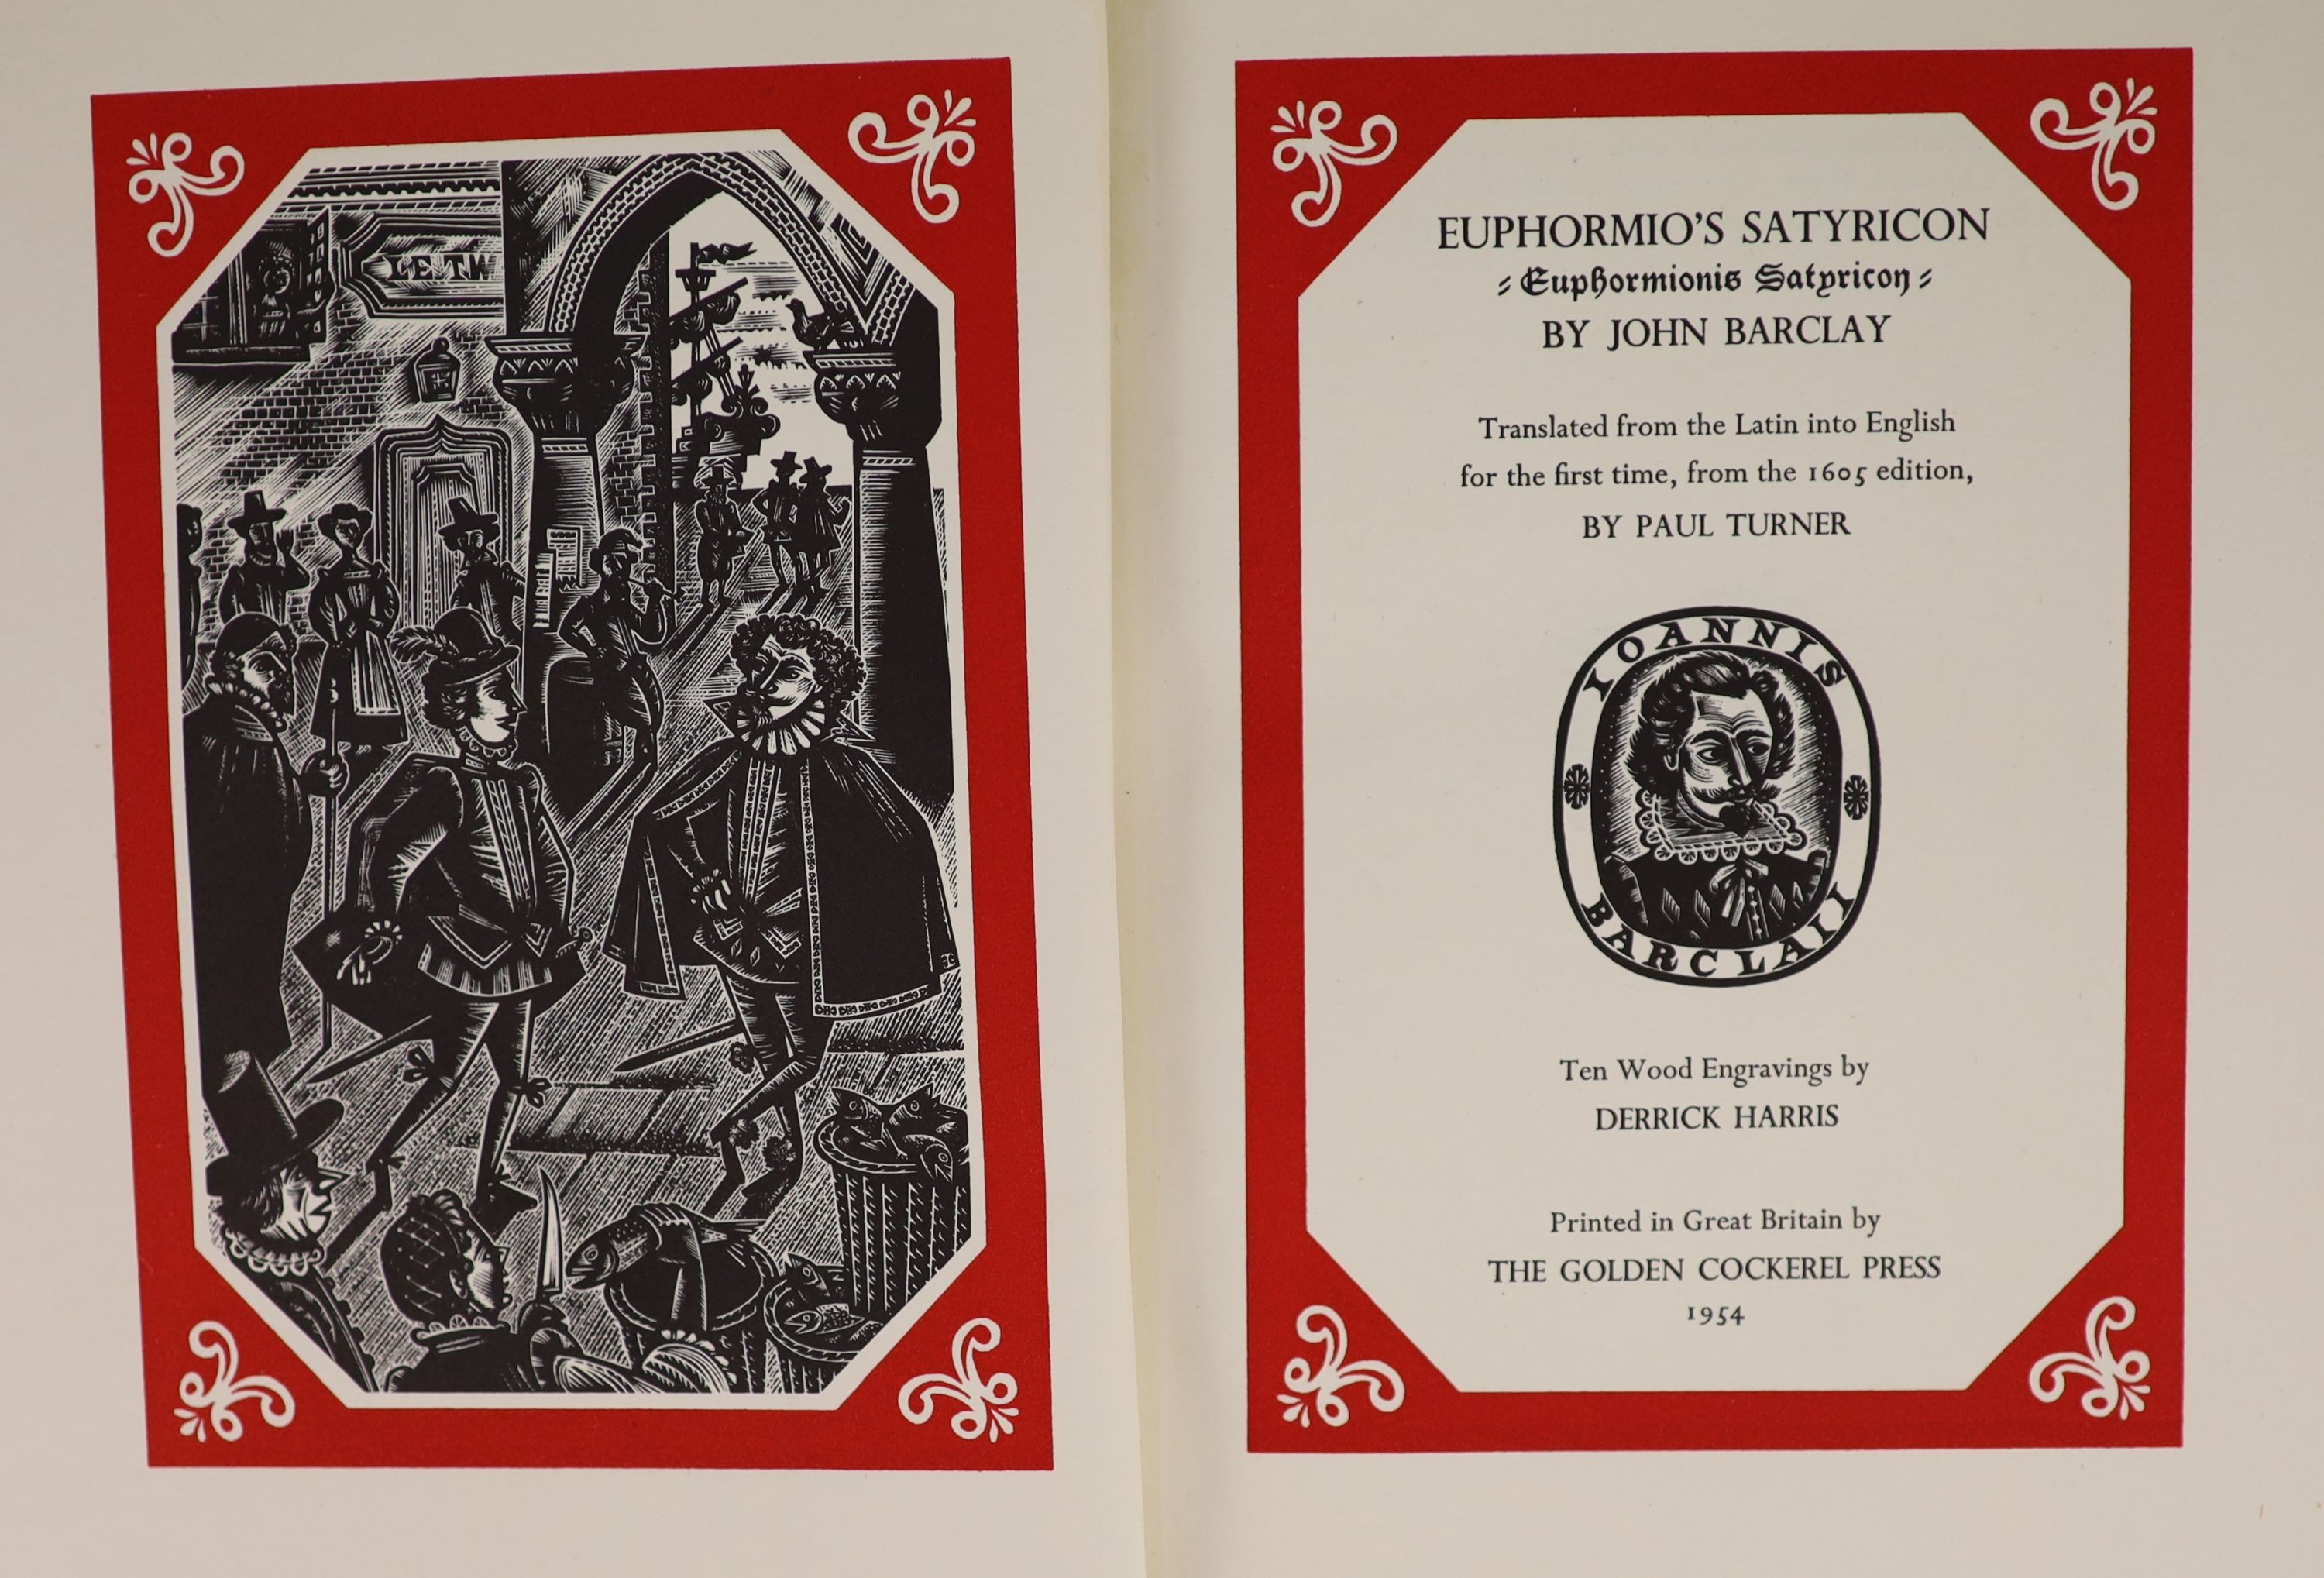 Golden Cockerel Press - Waltham Saint Lawrence, Berkshire - Barclay, John - Euphormio’s Satyricon, one of 260, with 10 engravings by Derrick Harris, 1954